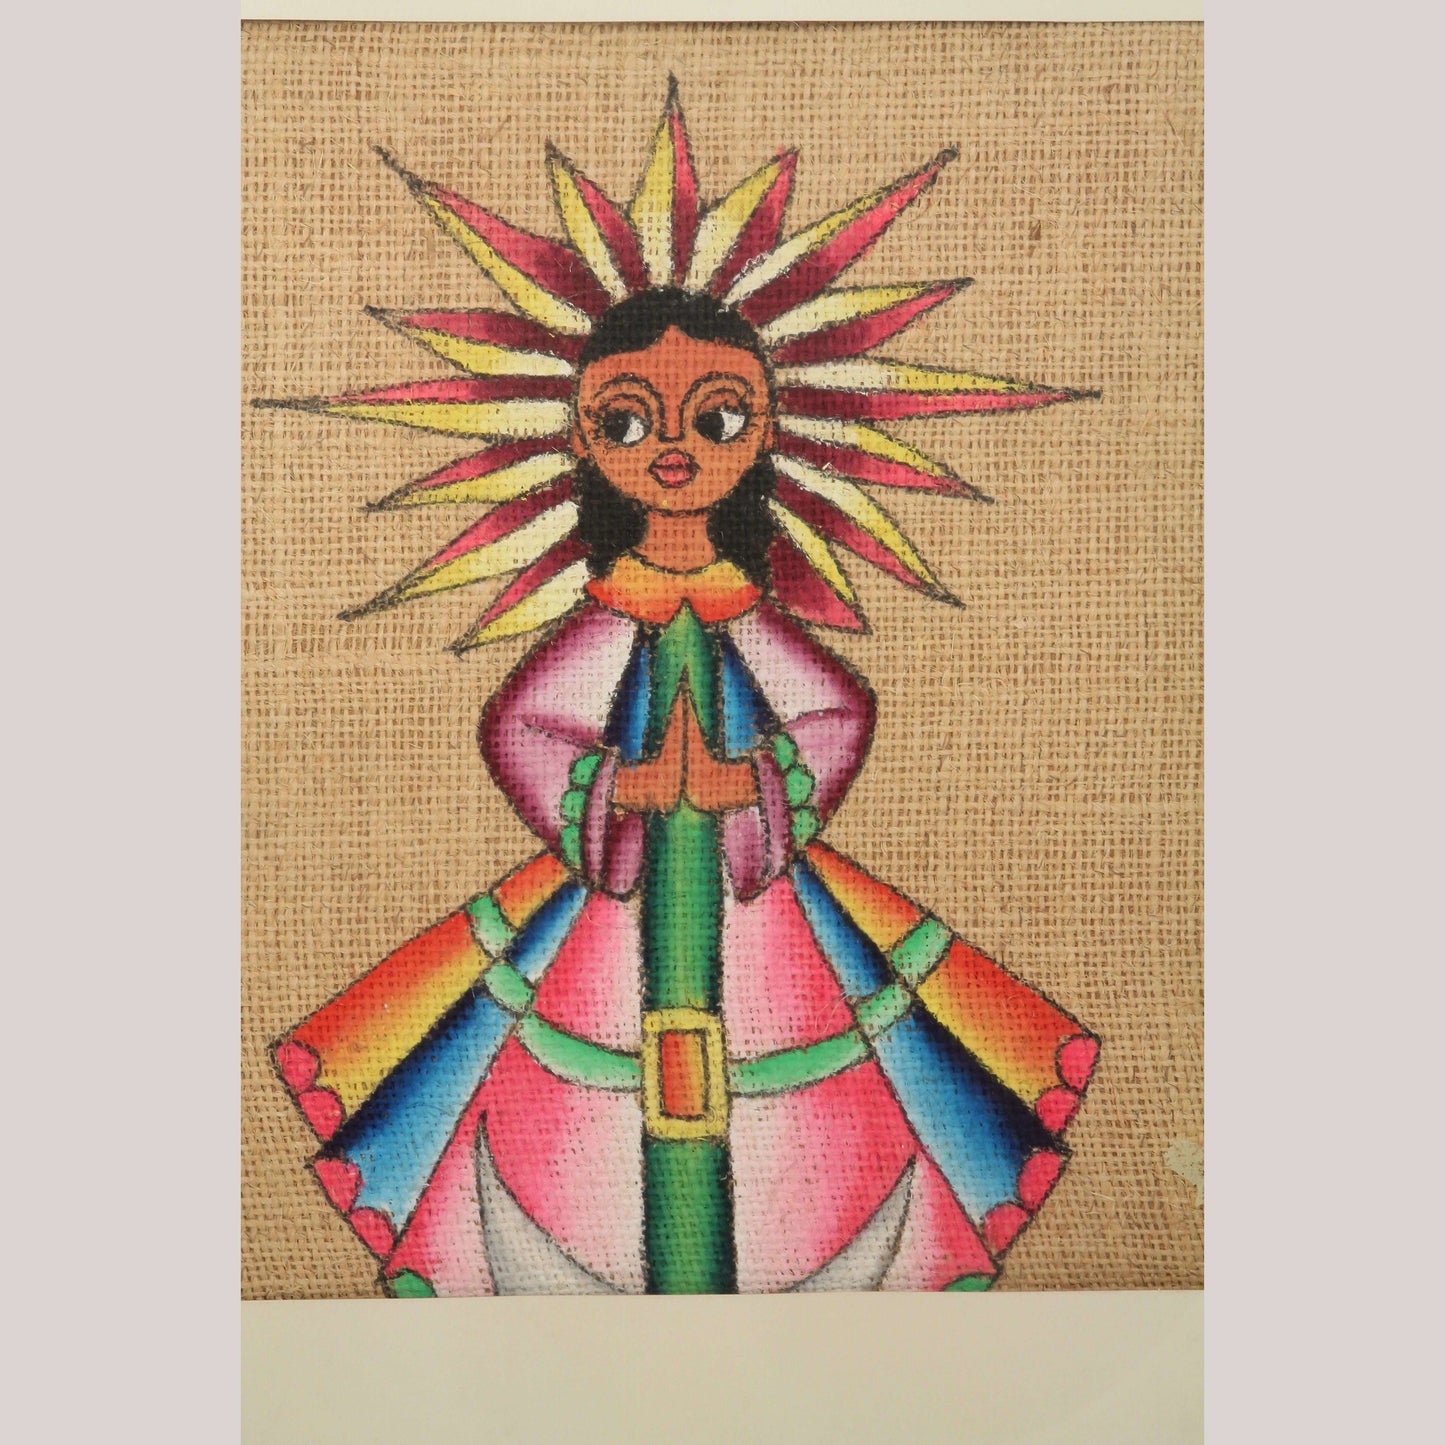 Vntg Original Painted Burlap Painting of Madonna Mexican Folk Art Signed